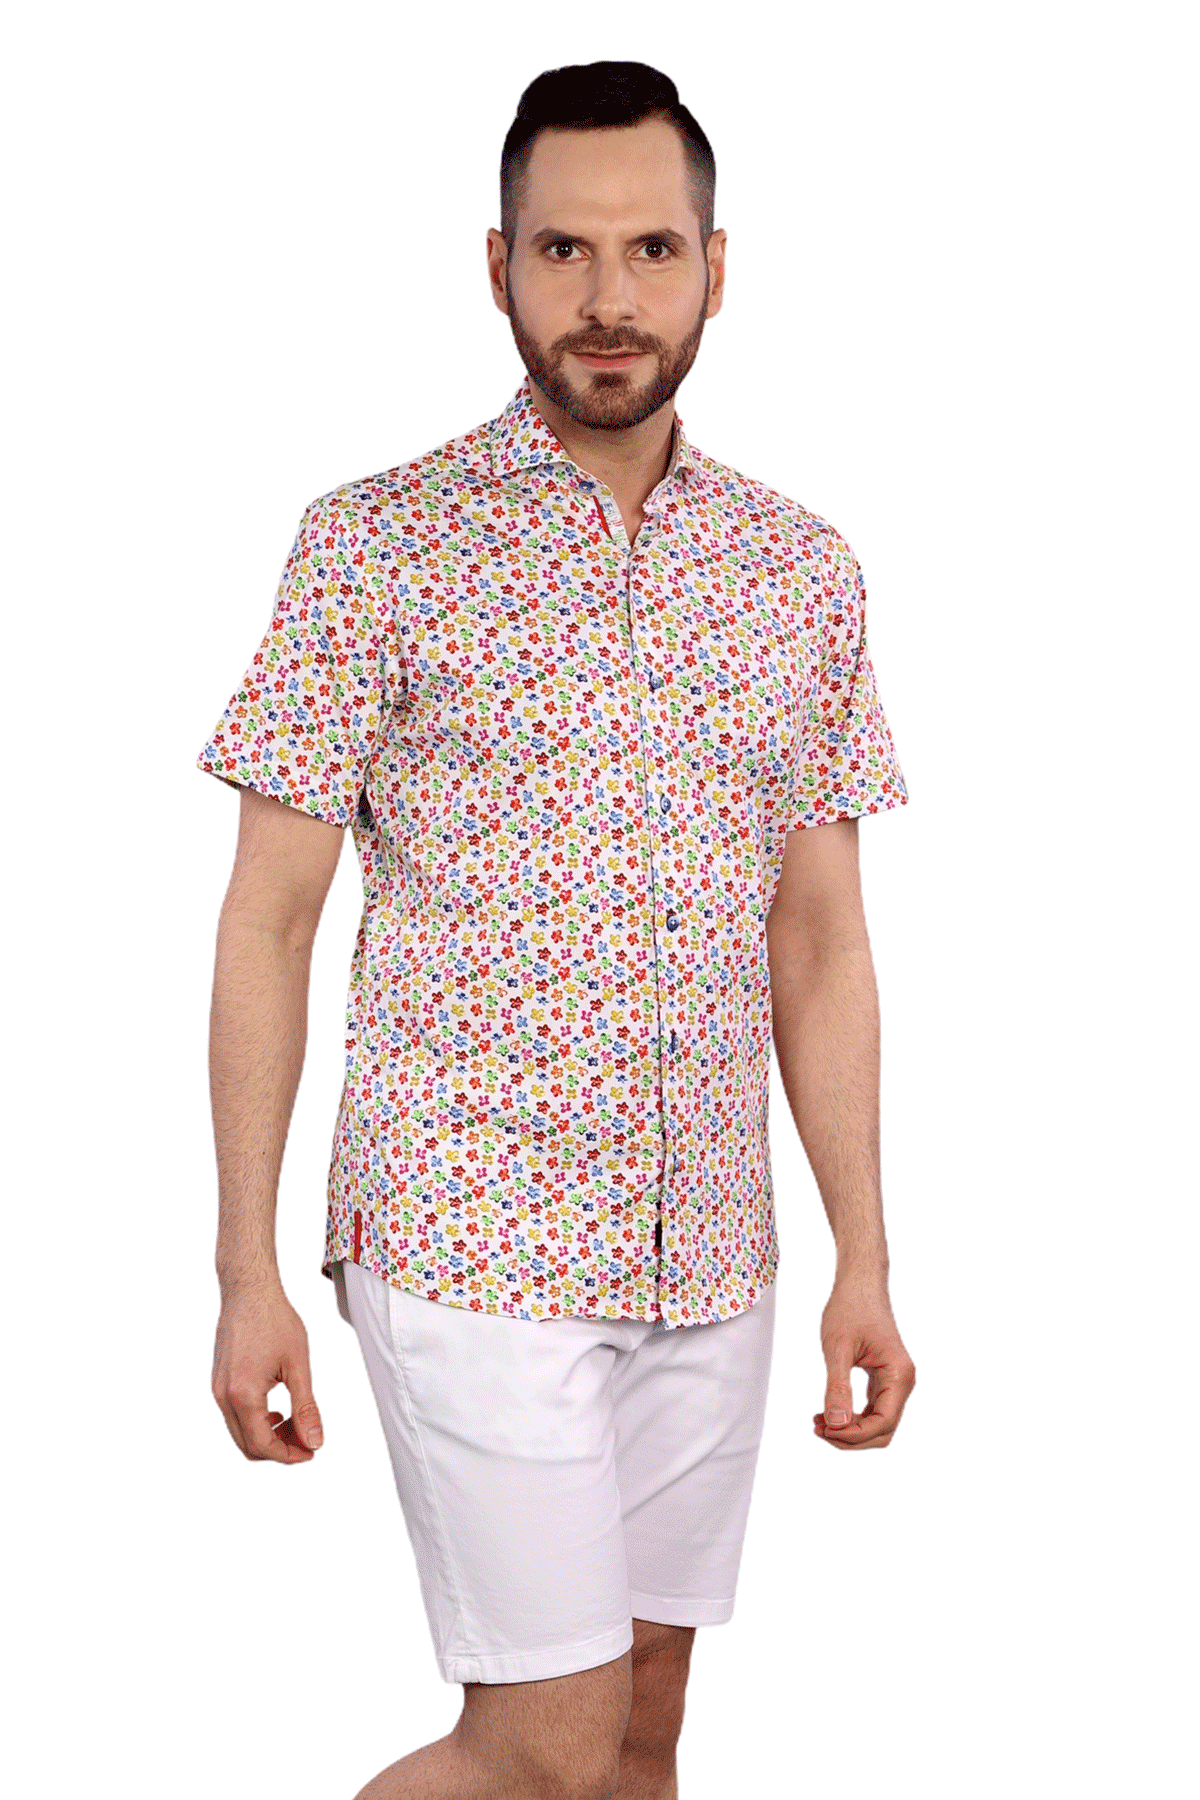 600 - Floral Short Sleeve Shirt - 7 Downie St.®